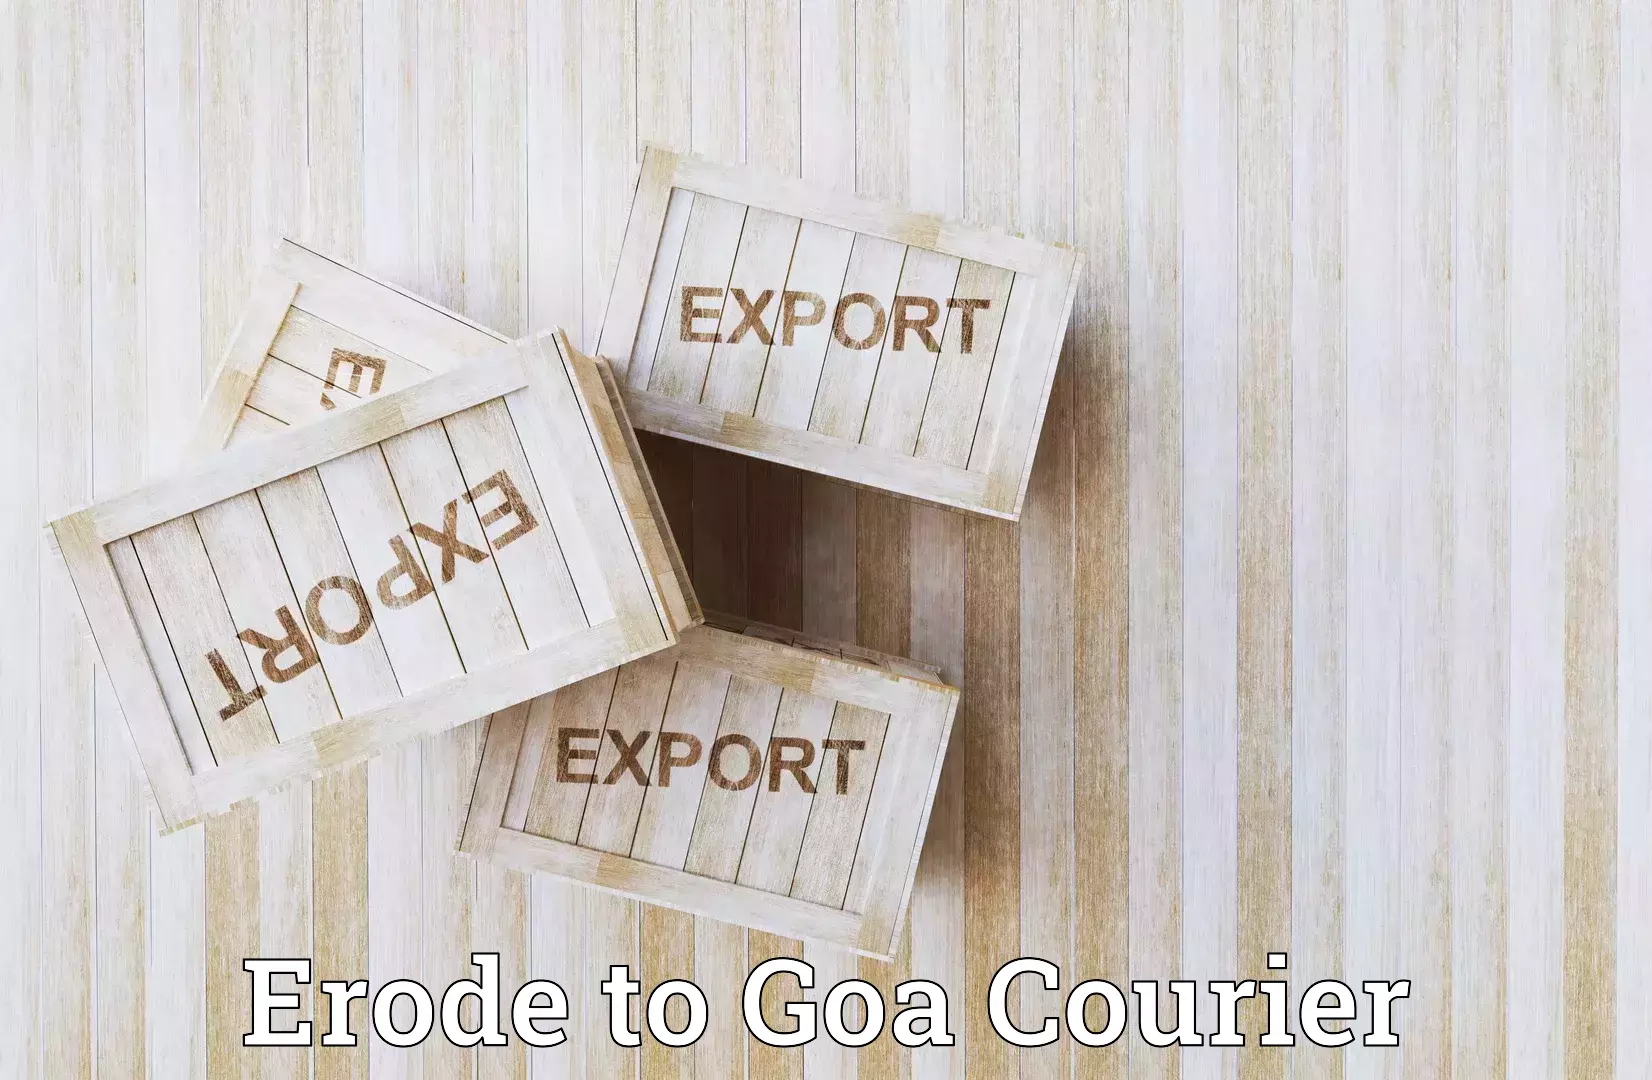 Efficient logistics management Erode to Goa